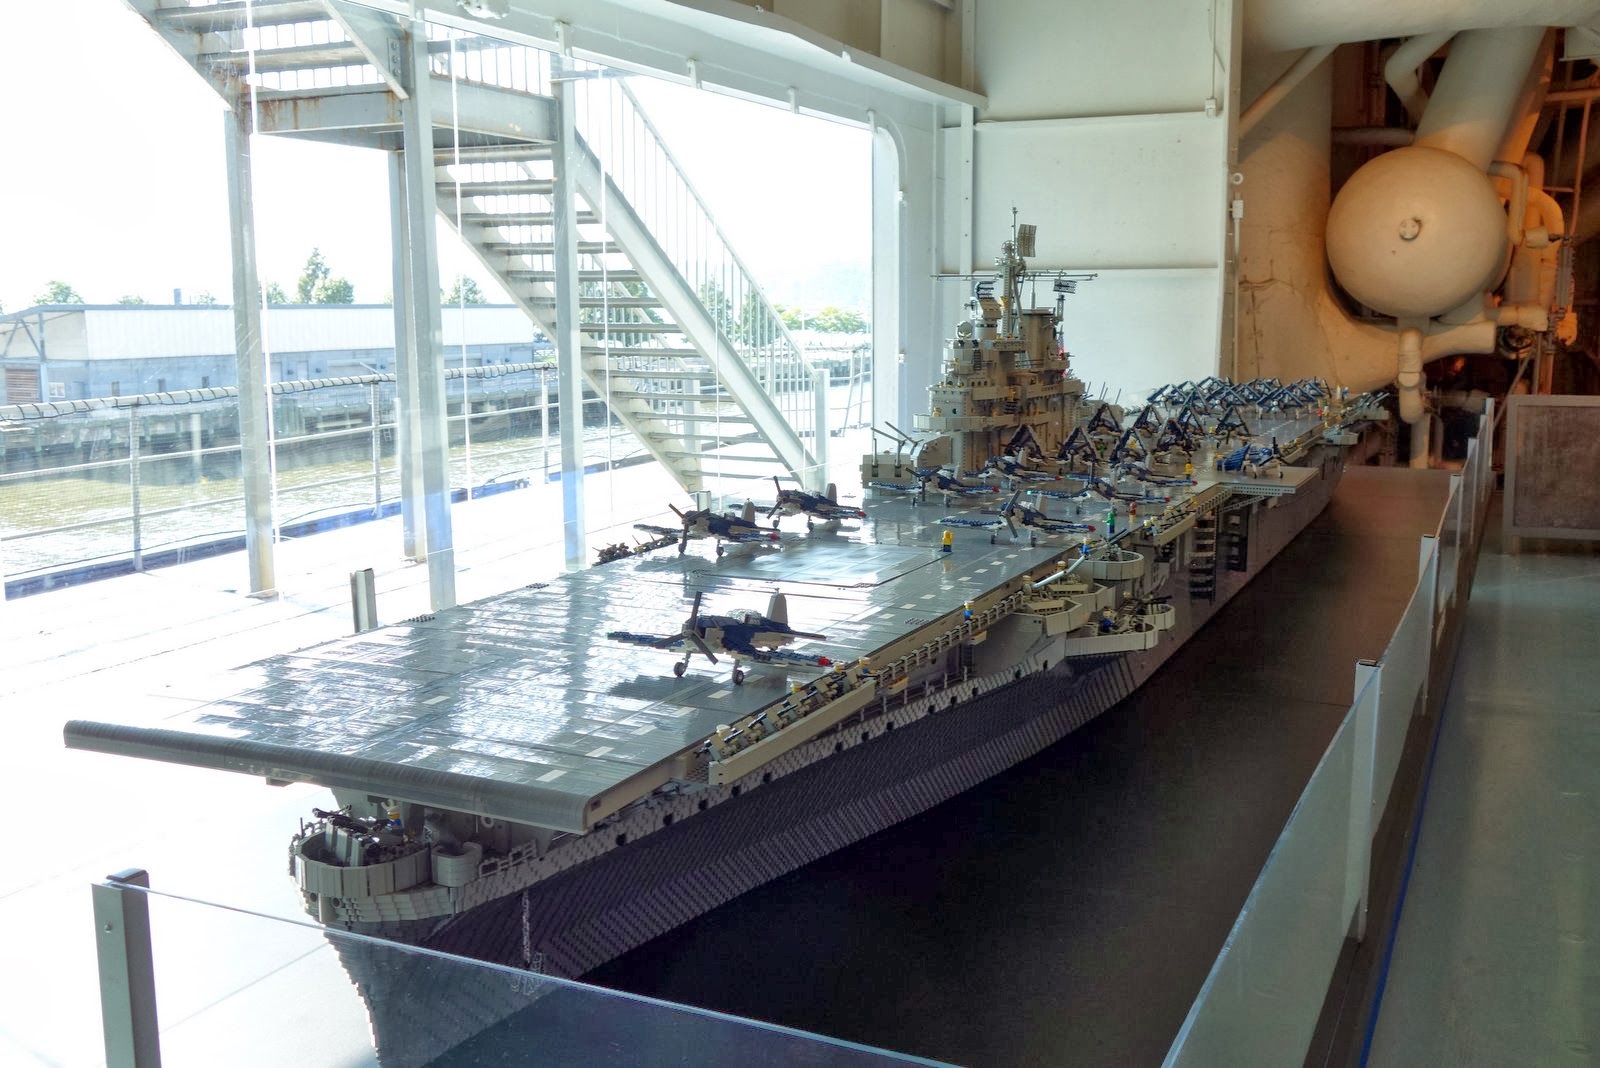 La portaerei USS Intrepid in versione LEGO